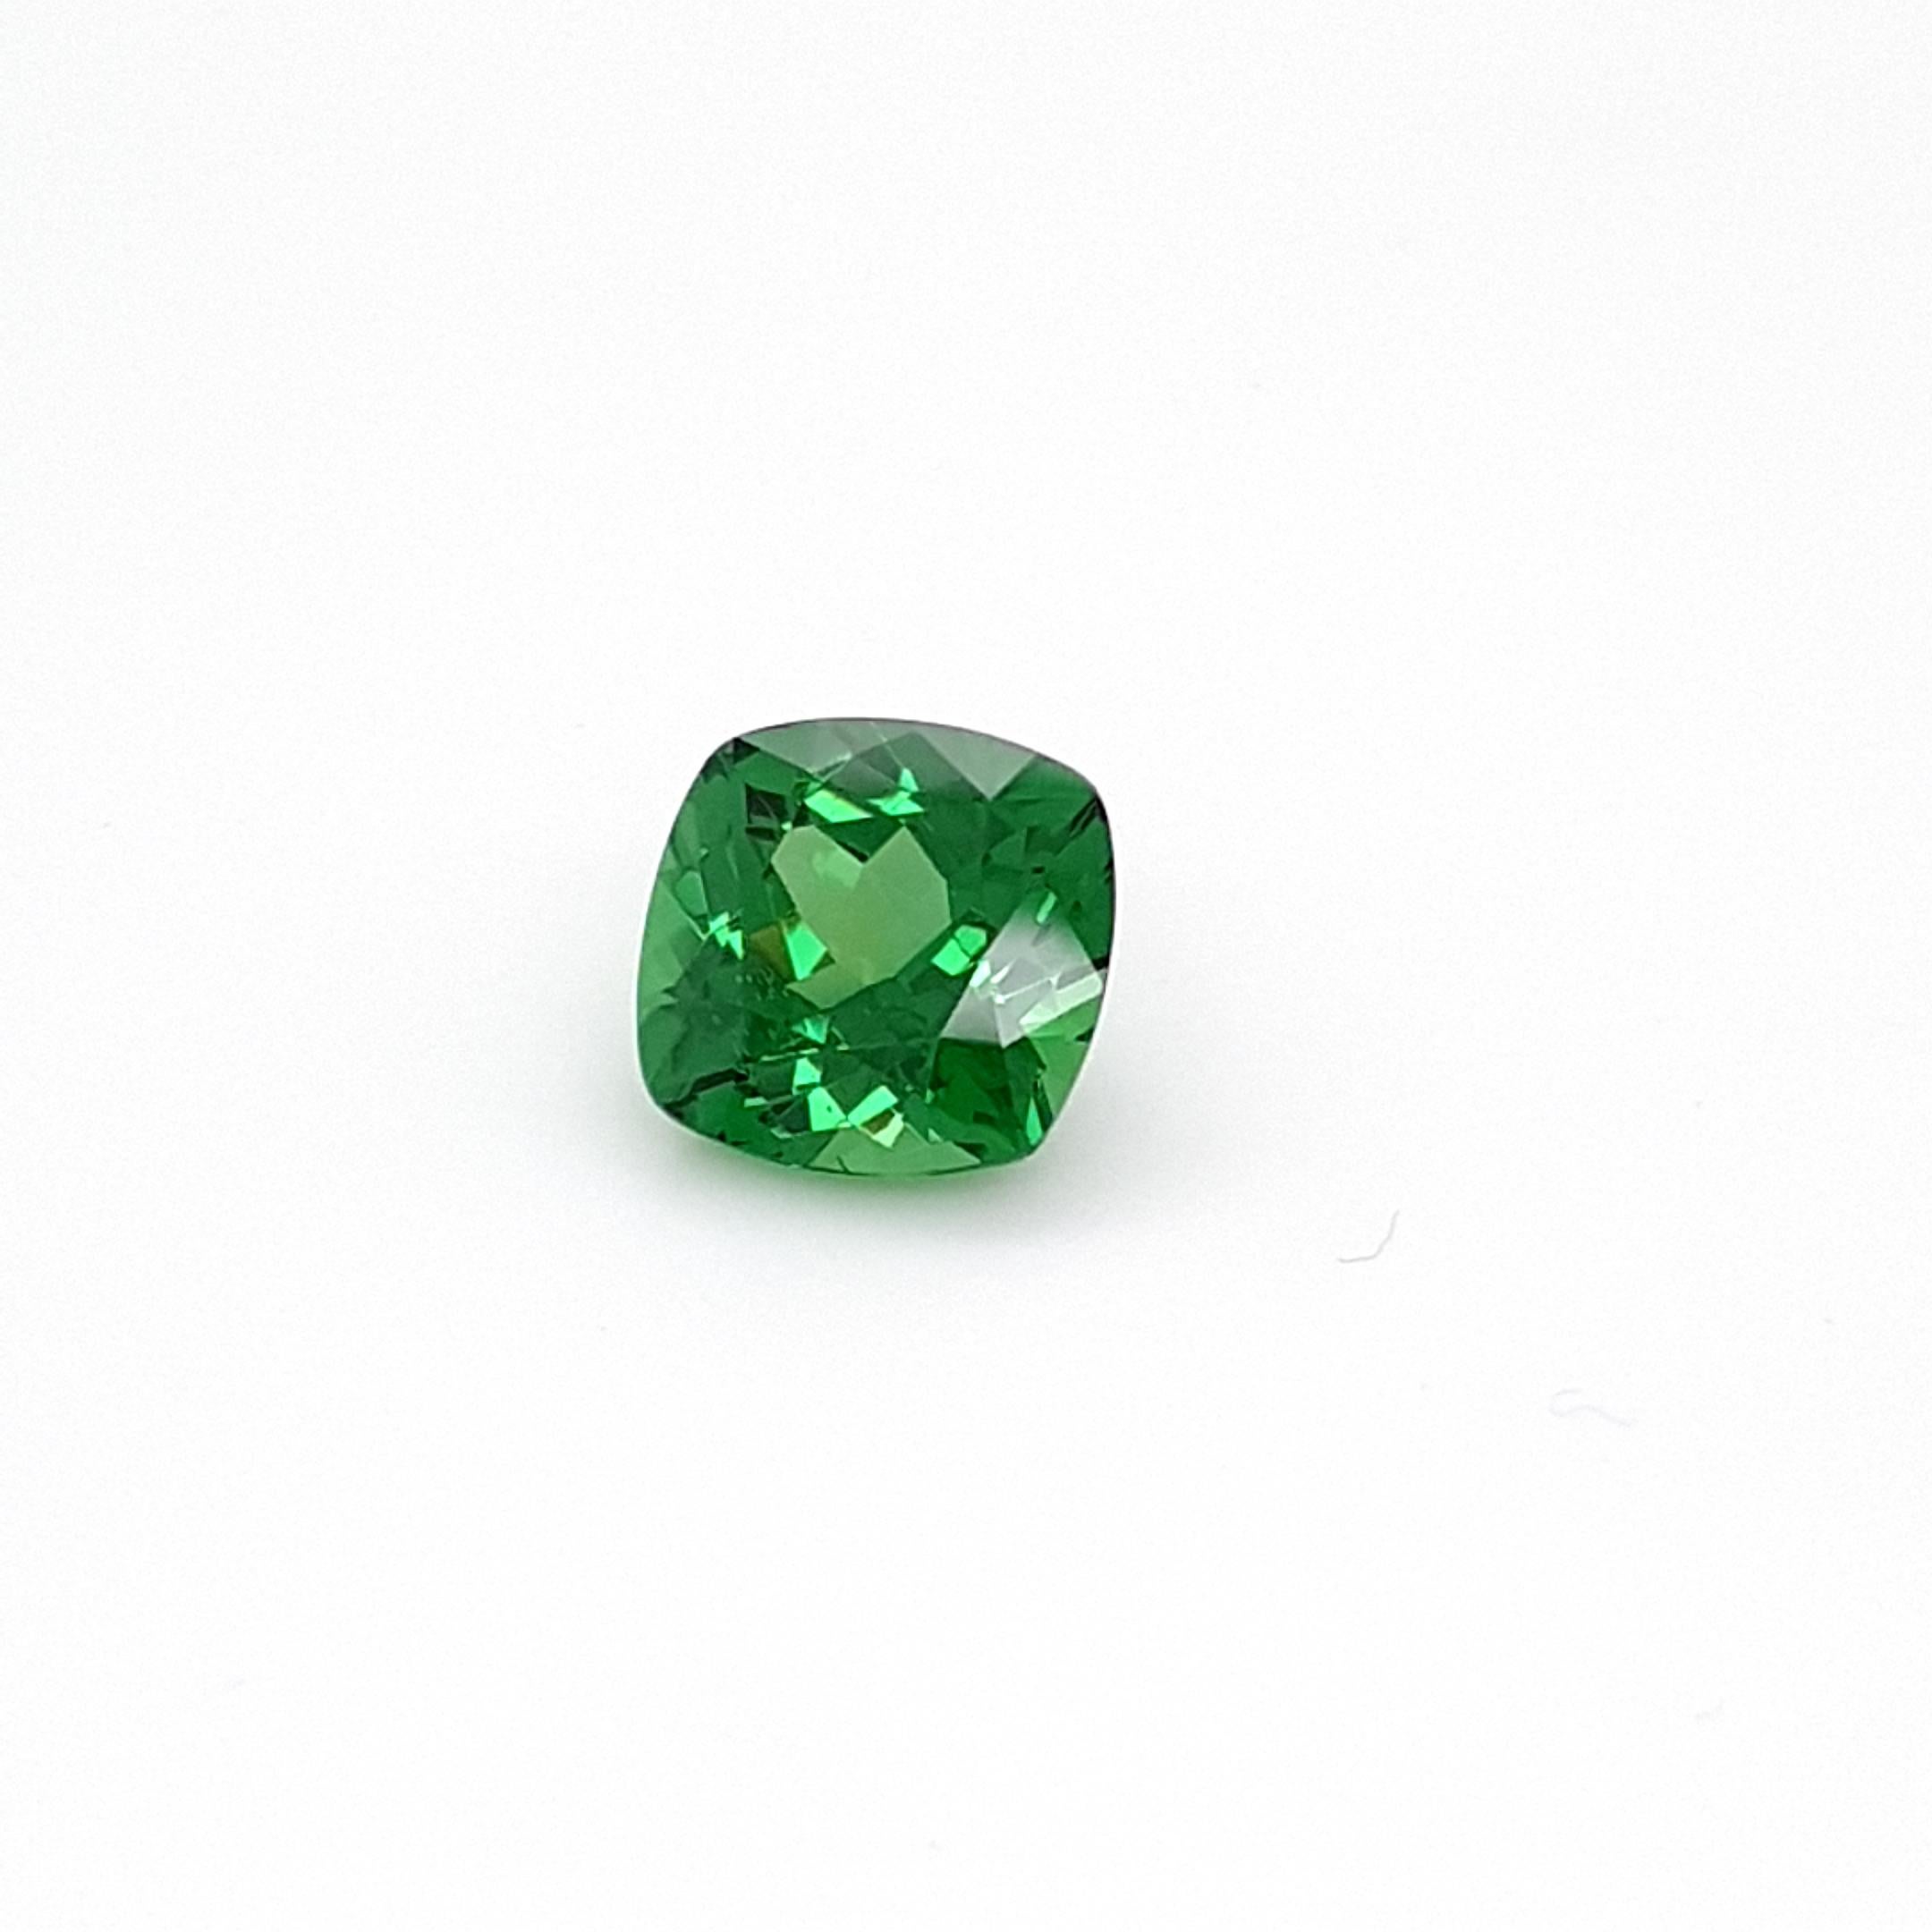 Intense Green Tsavorite Garnet, Faceted Gem, 4, 61 ct., loose Gemstone For Sale 4